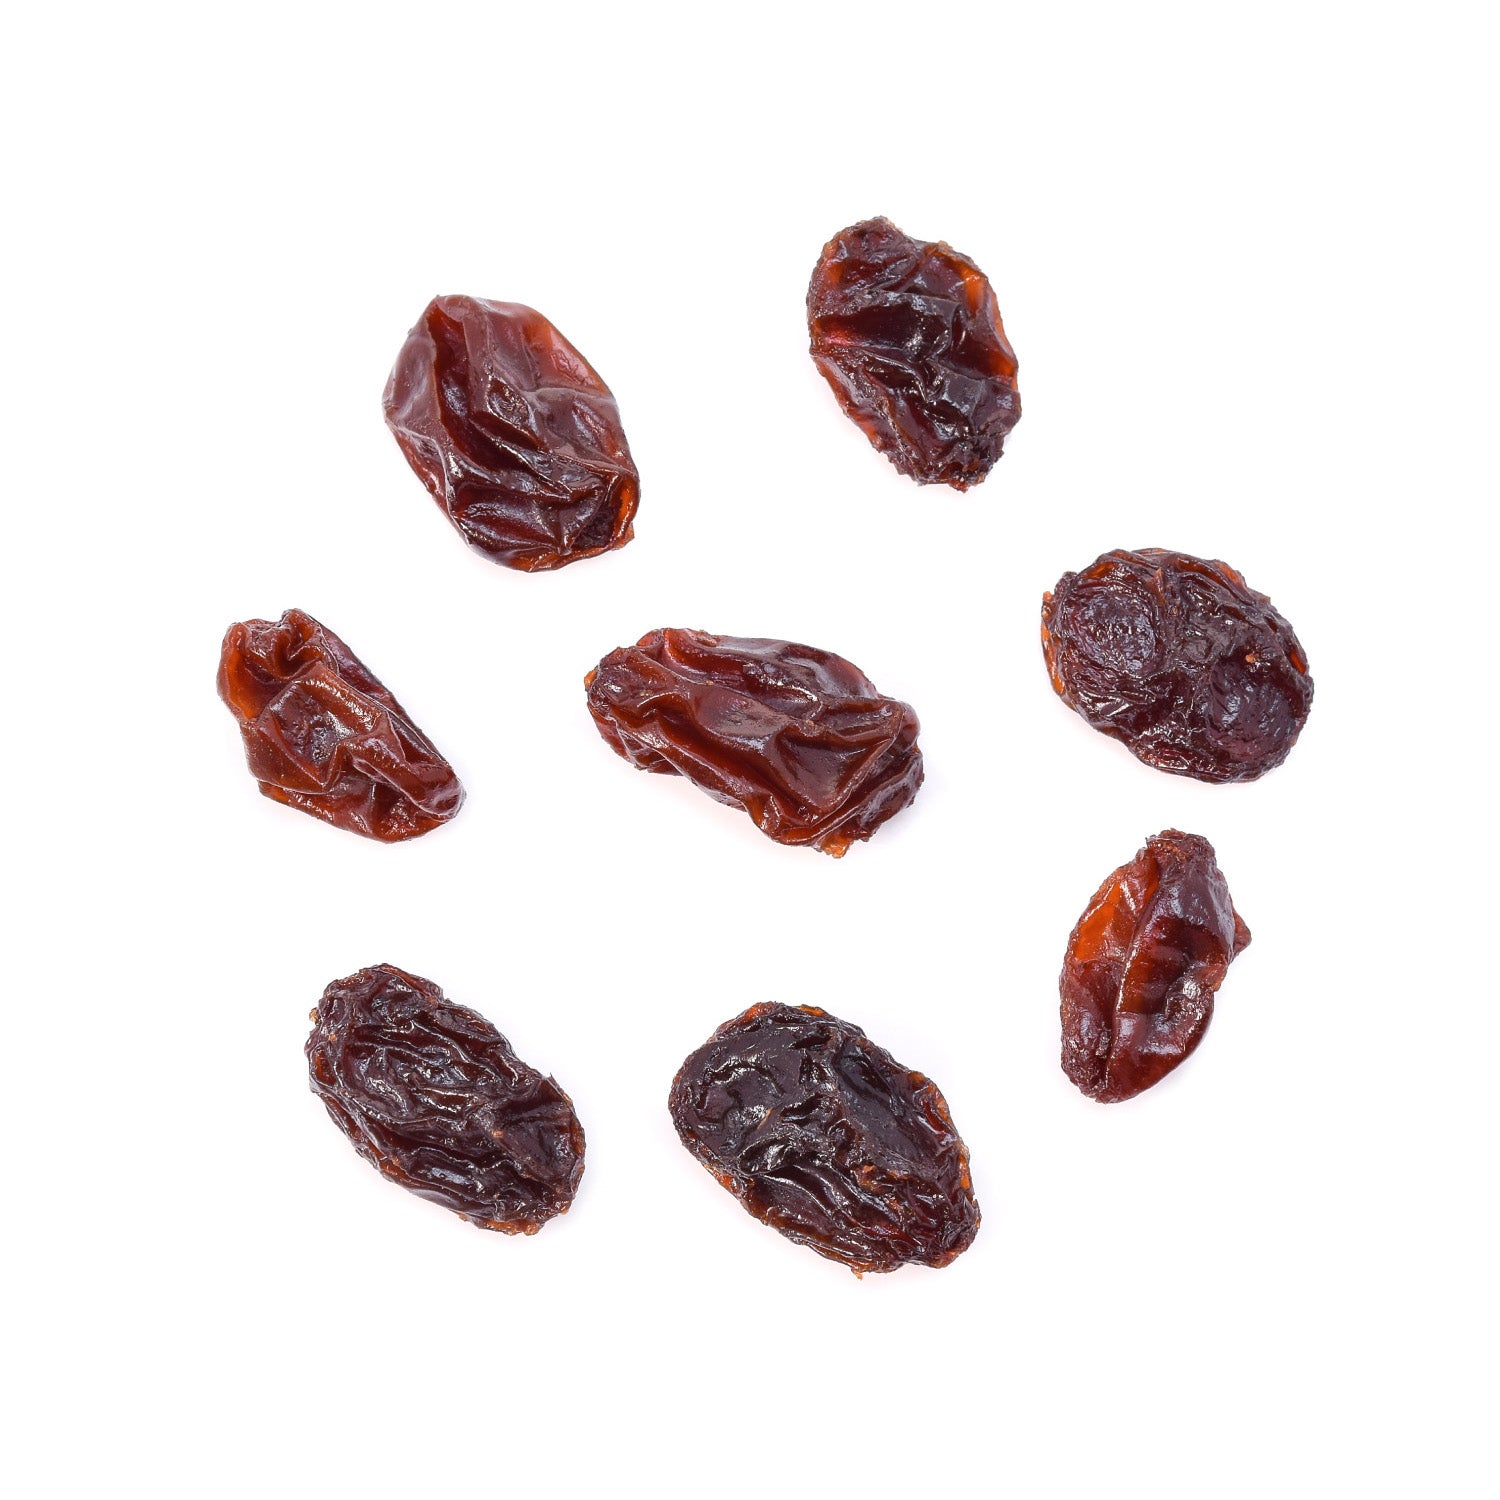 Eight organic raisins on a white background